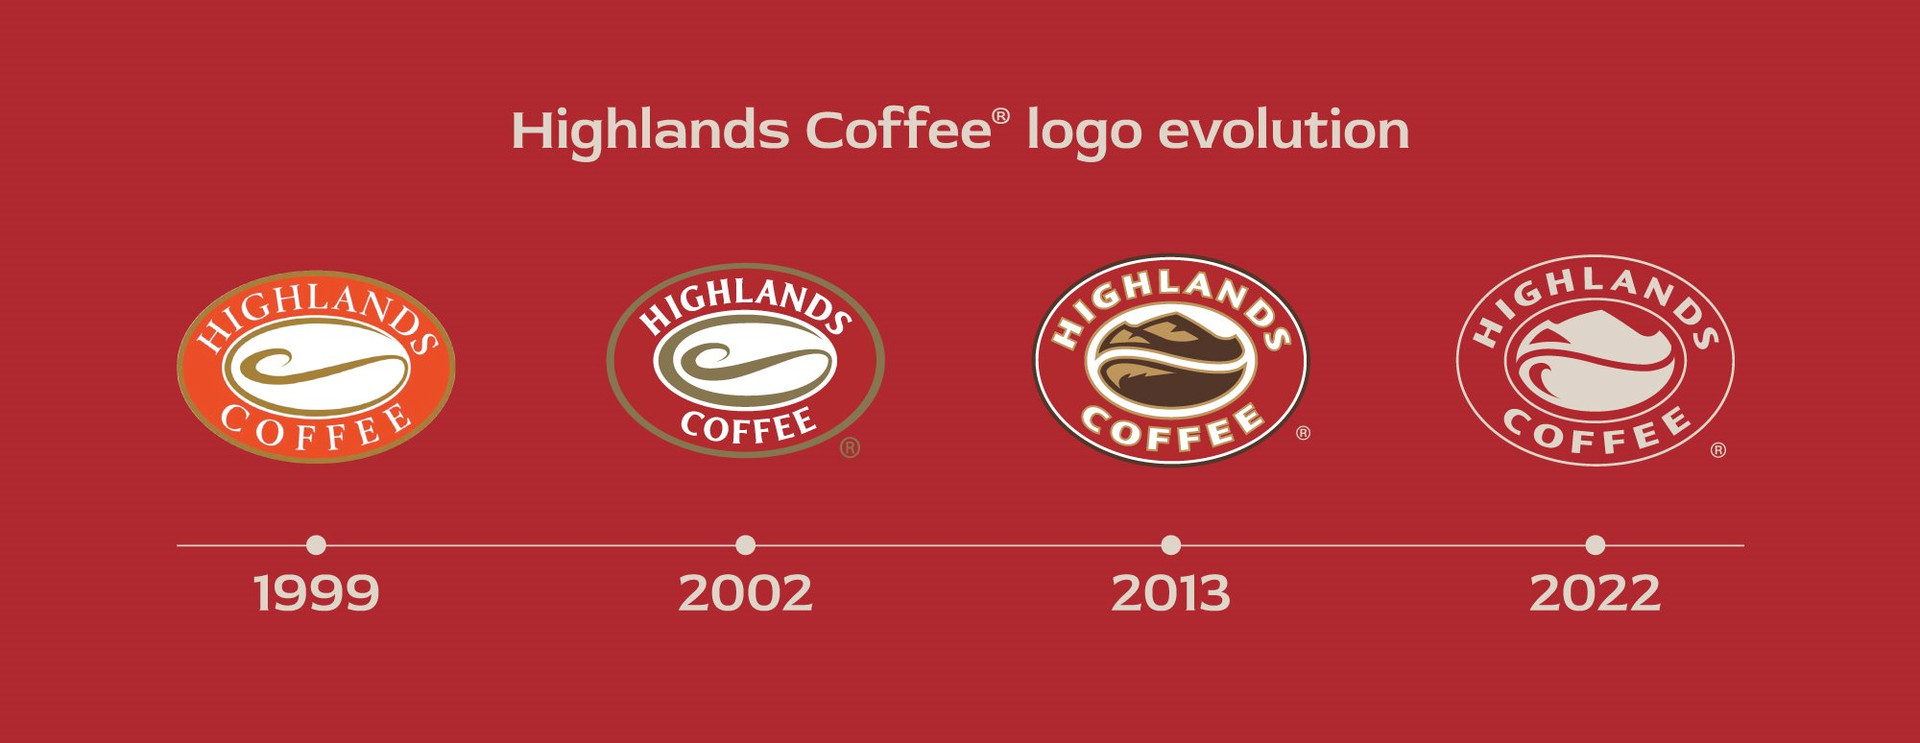 highlands-coffee-logo-evolution-eng(2).jpeg